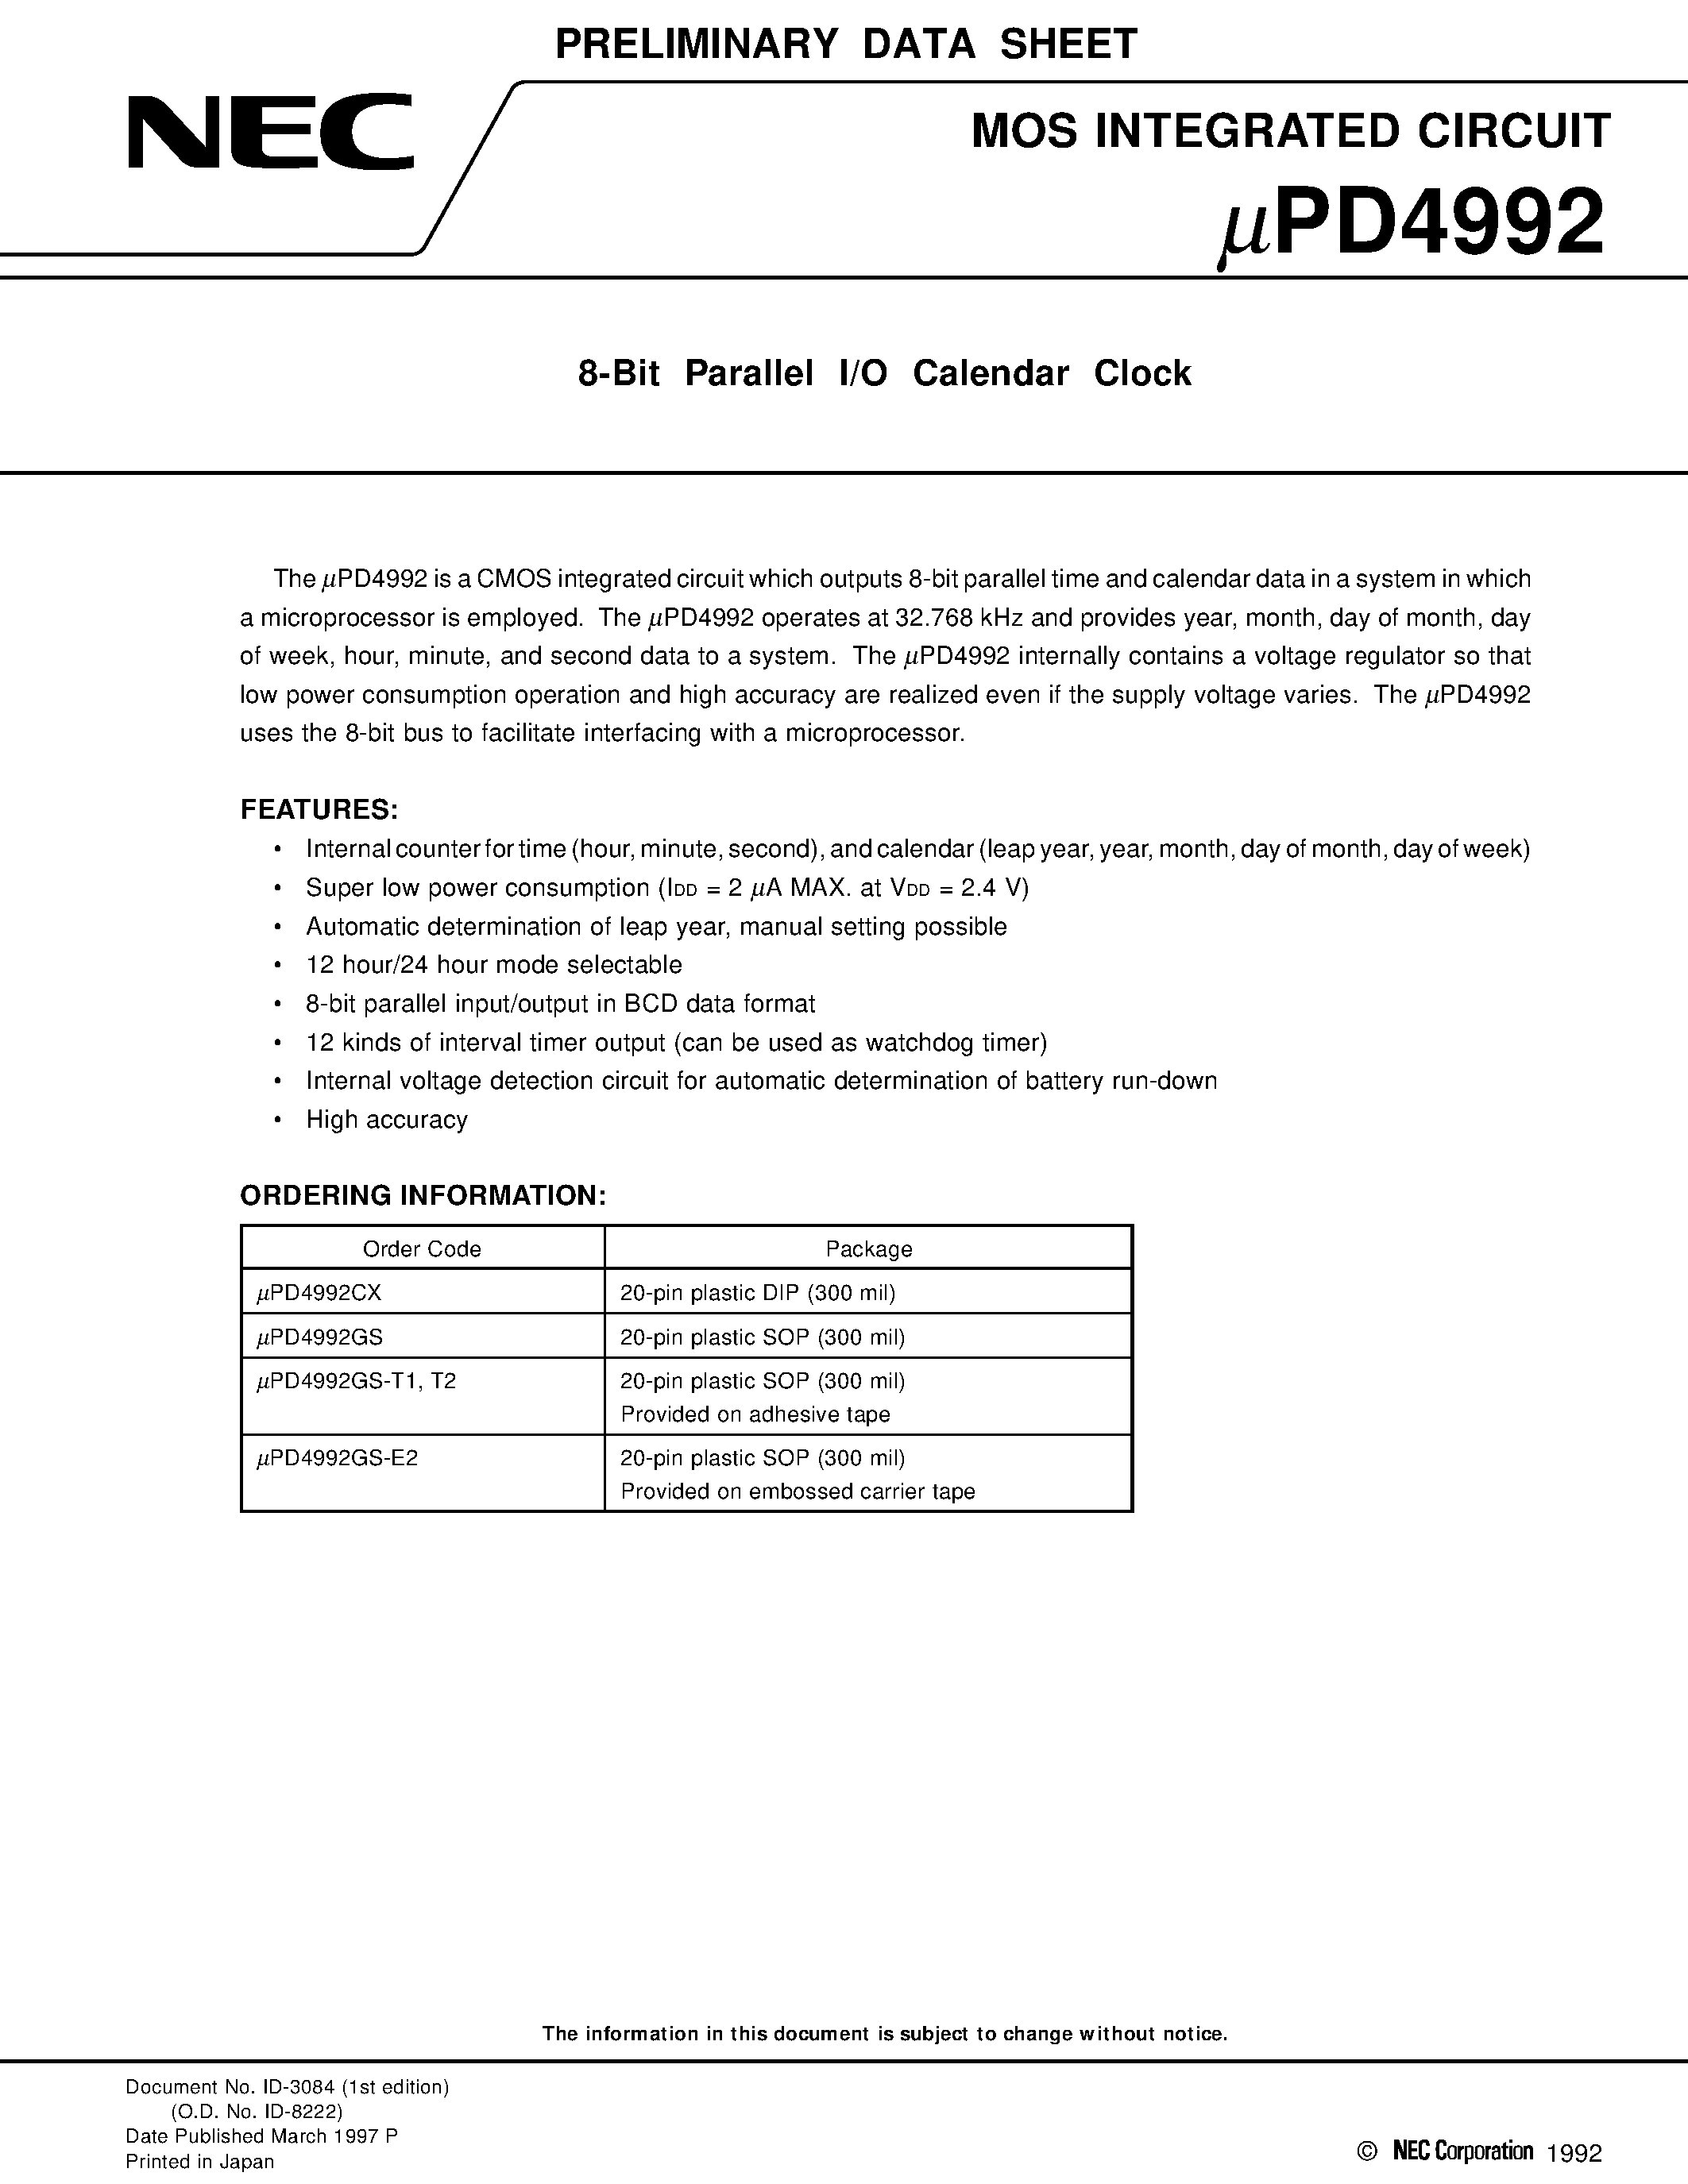 Datasheet UPD4992GS-E2 - 8-Bit Parallel I/O Calendar Clock page 1